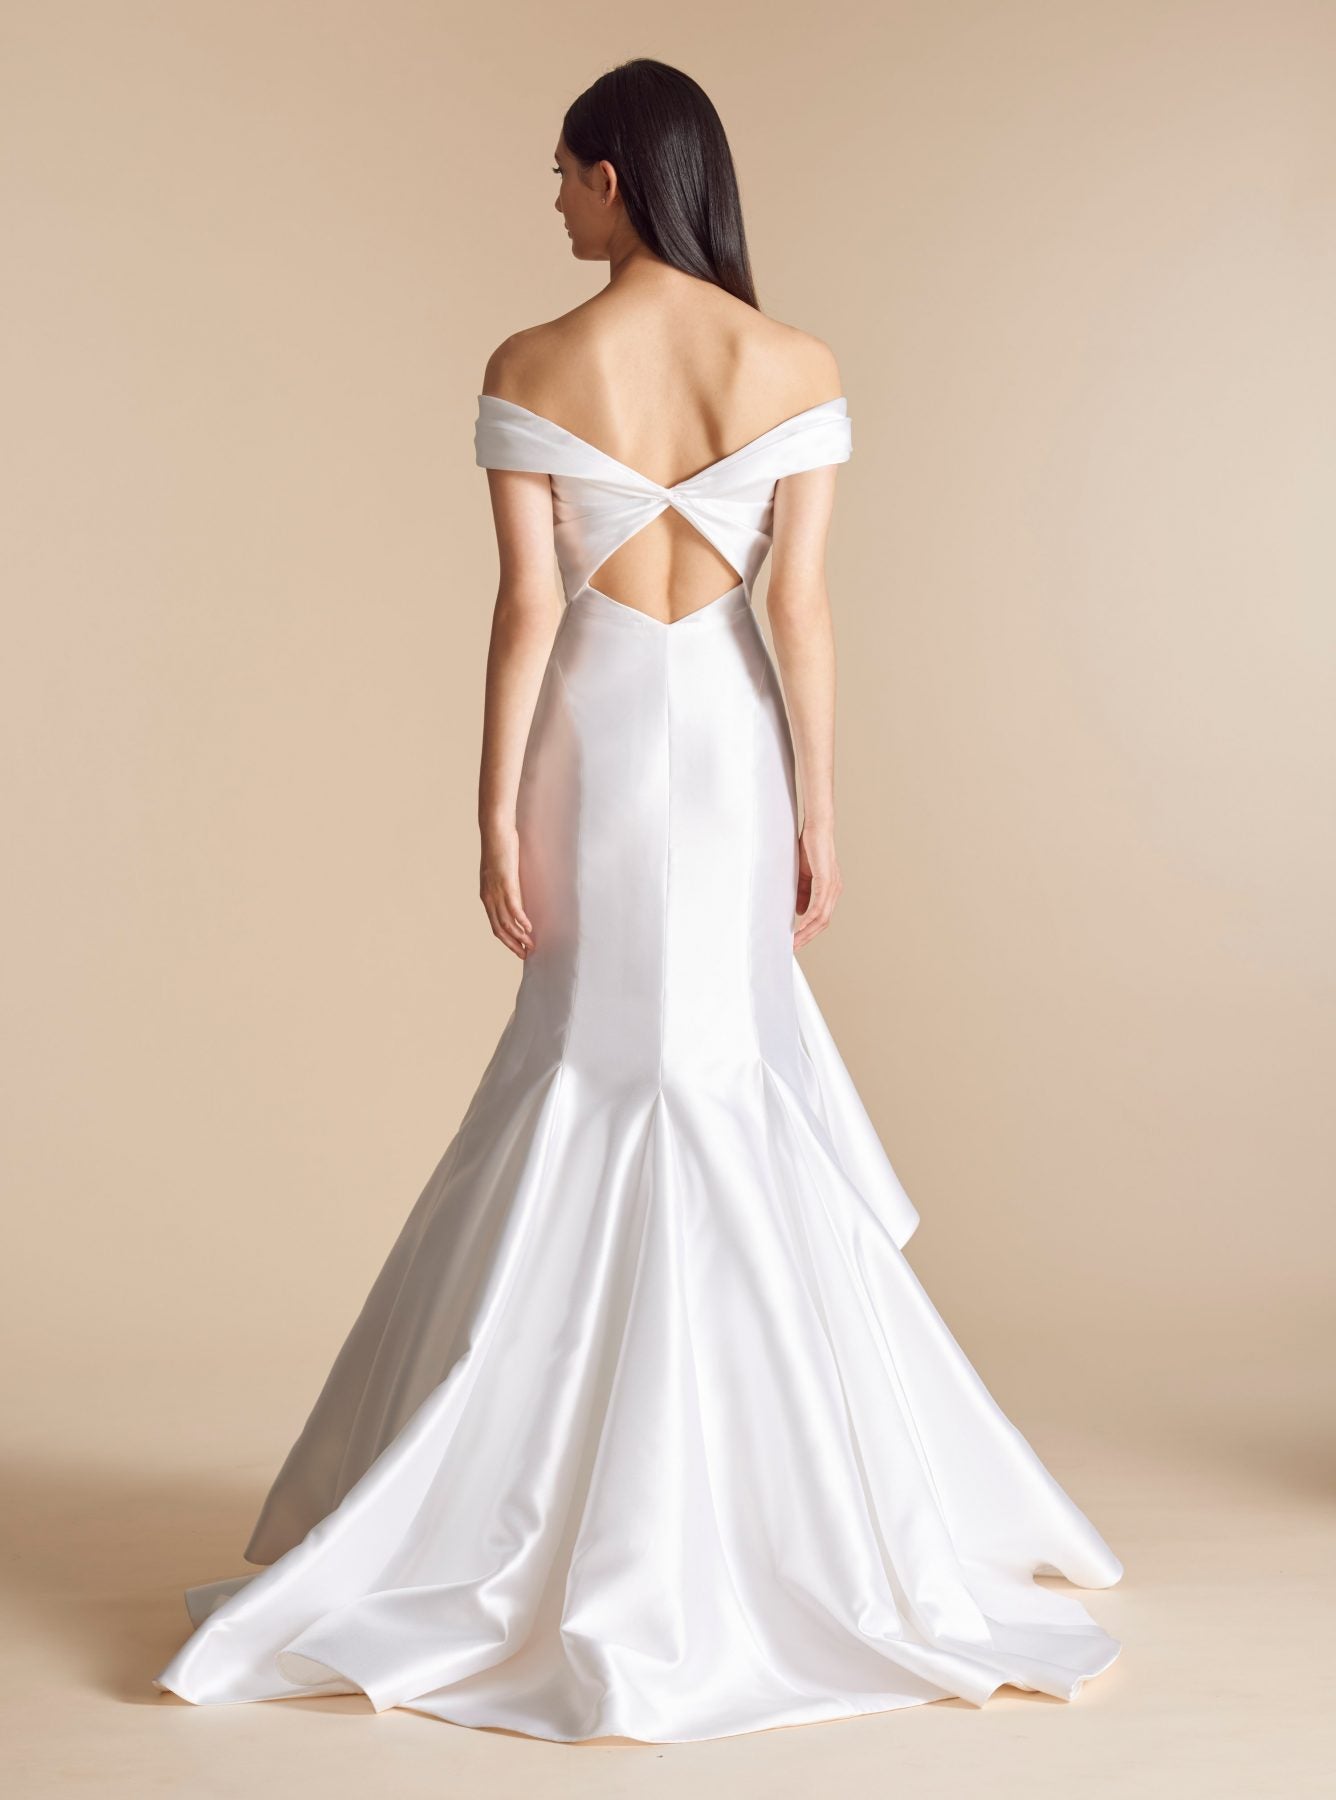 allison-webb-off-the-shoulder-ruched-bodice-and-modern-ruffled-skirt-wedding-dress-33834680-1-1336x1800.jpg